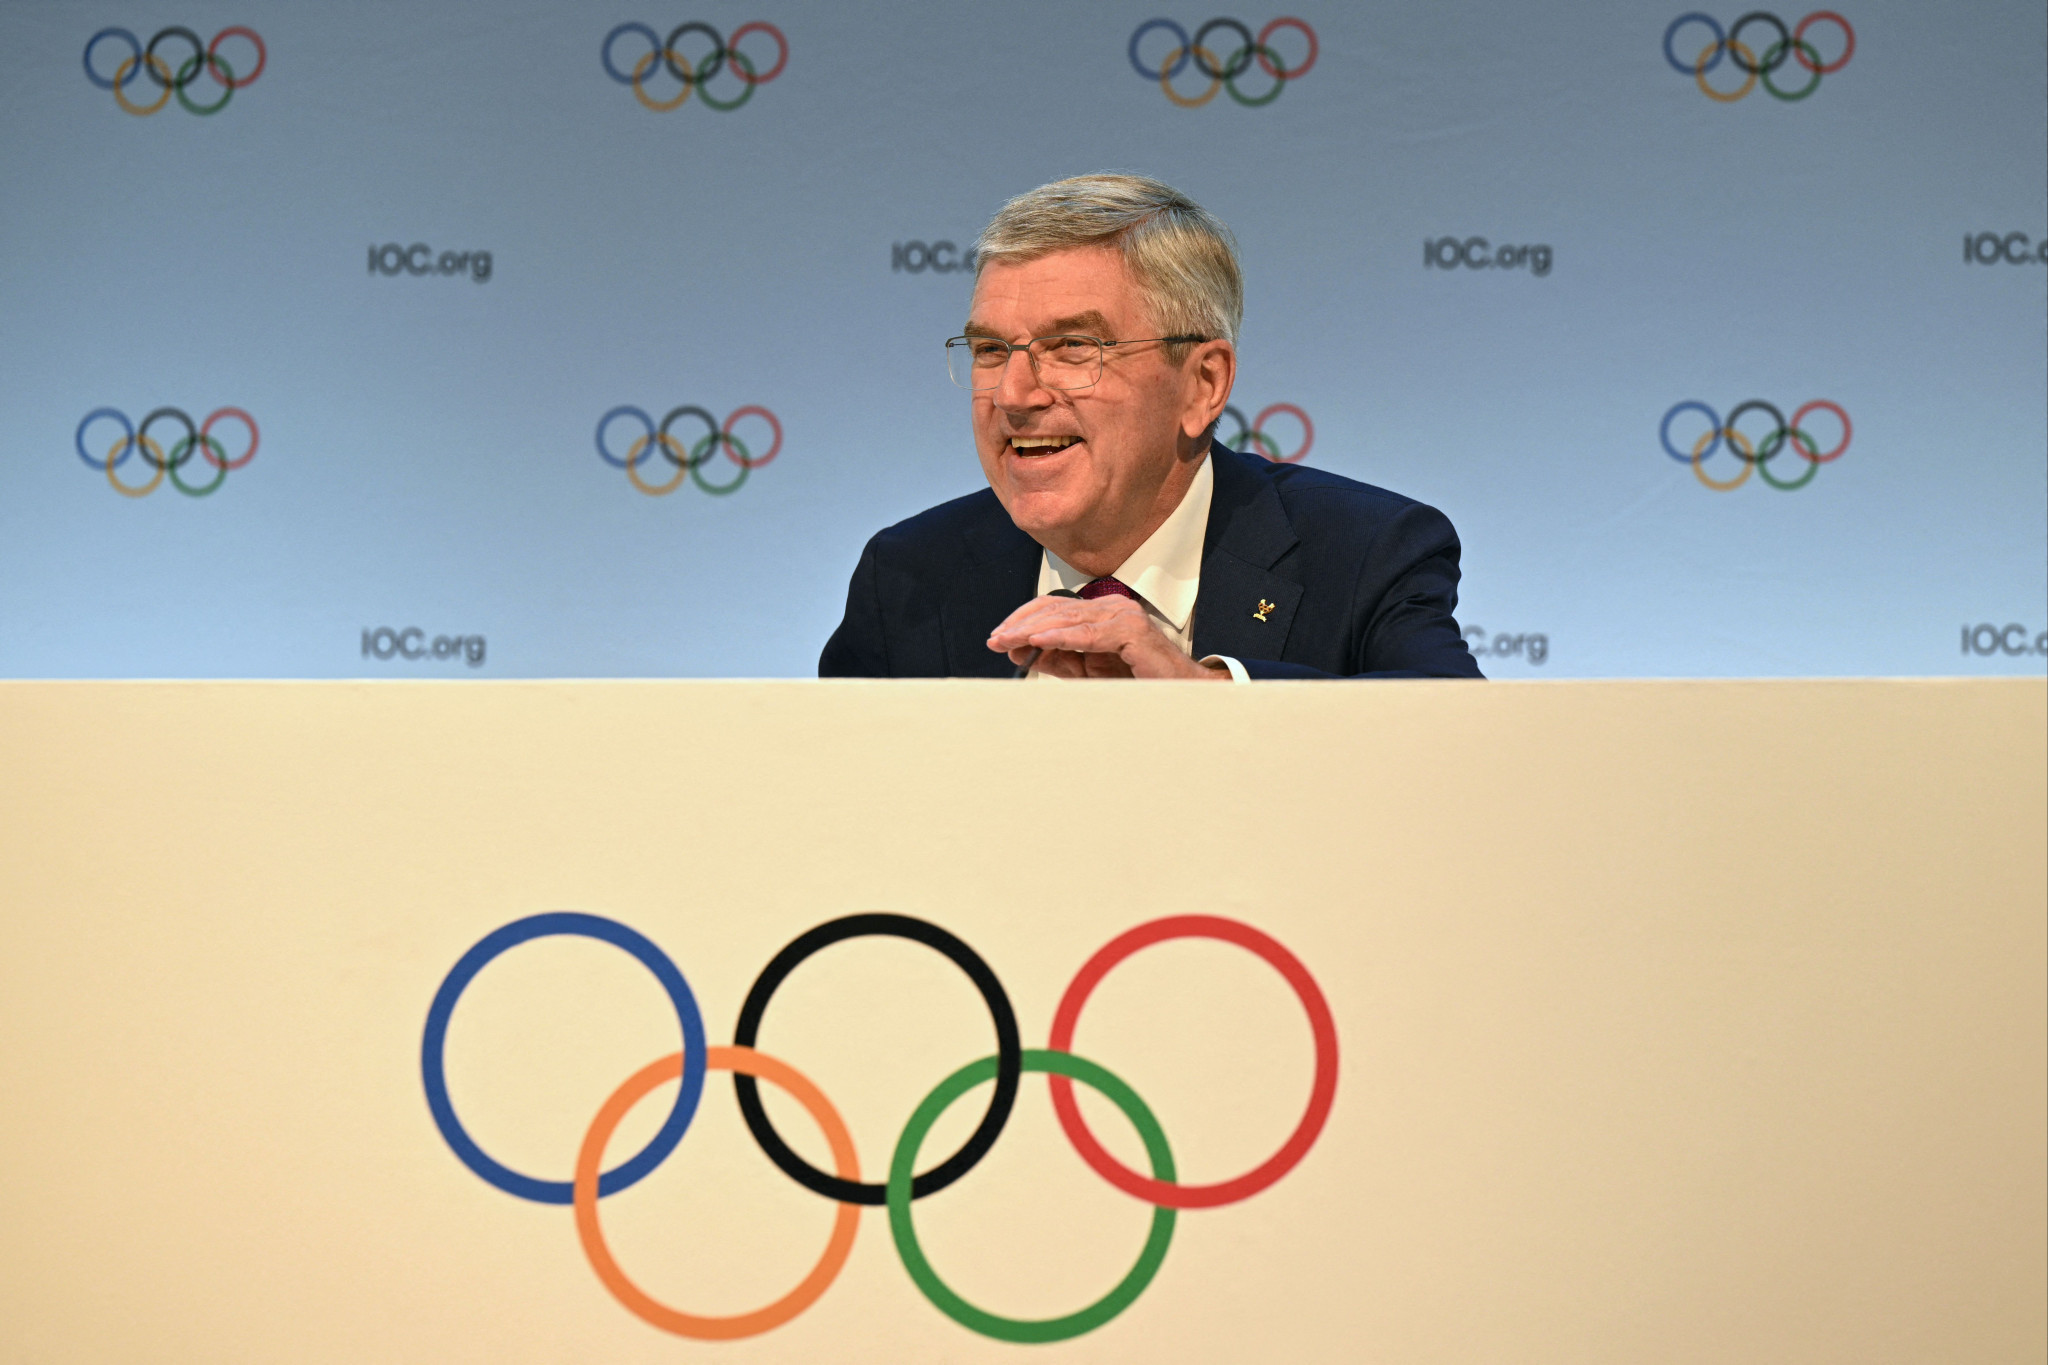 IOC President Thomas Bach hit back at Pakistan's Syed Shahid Ali, claiming 